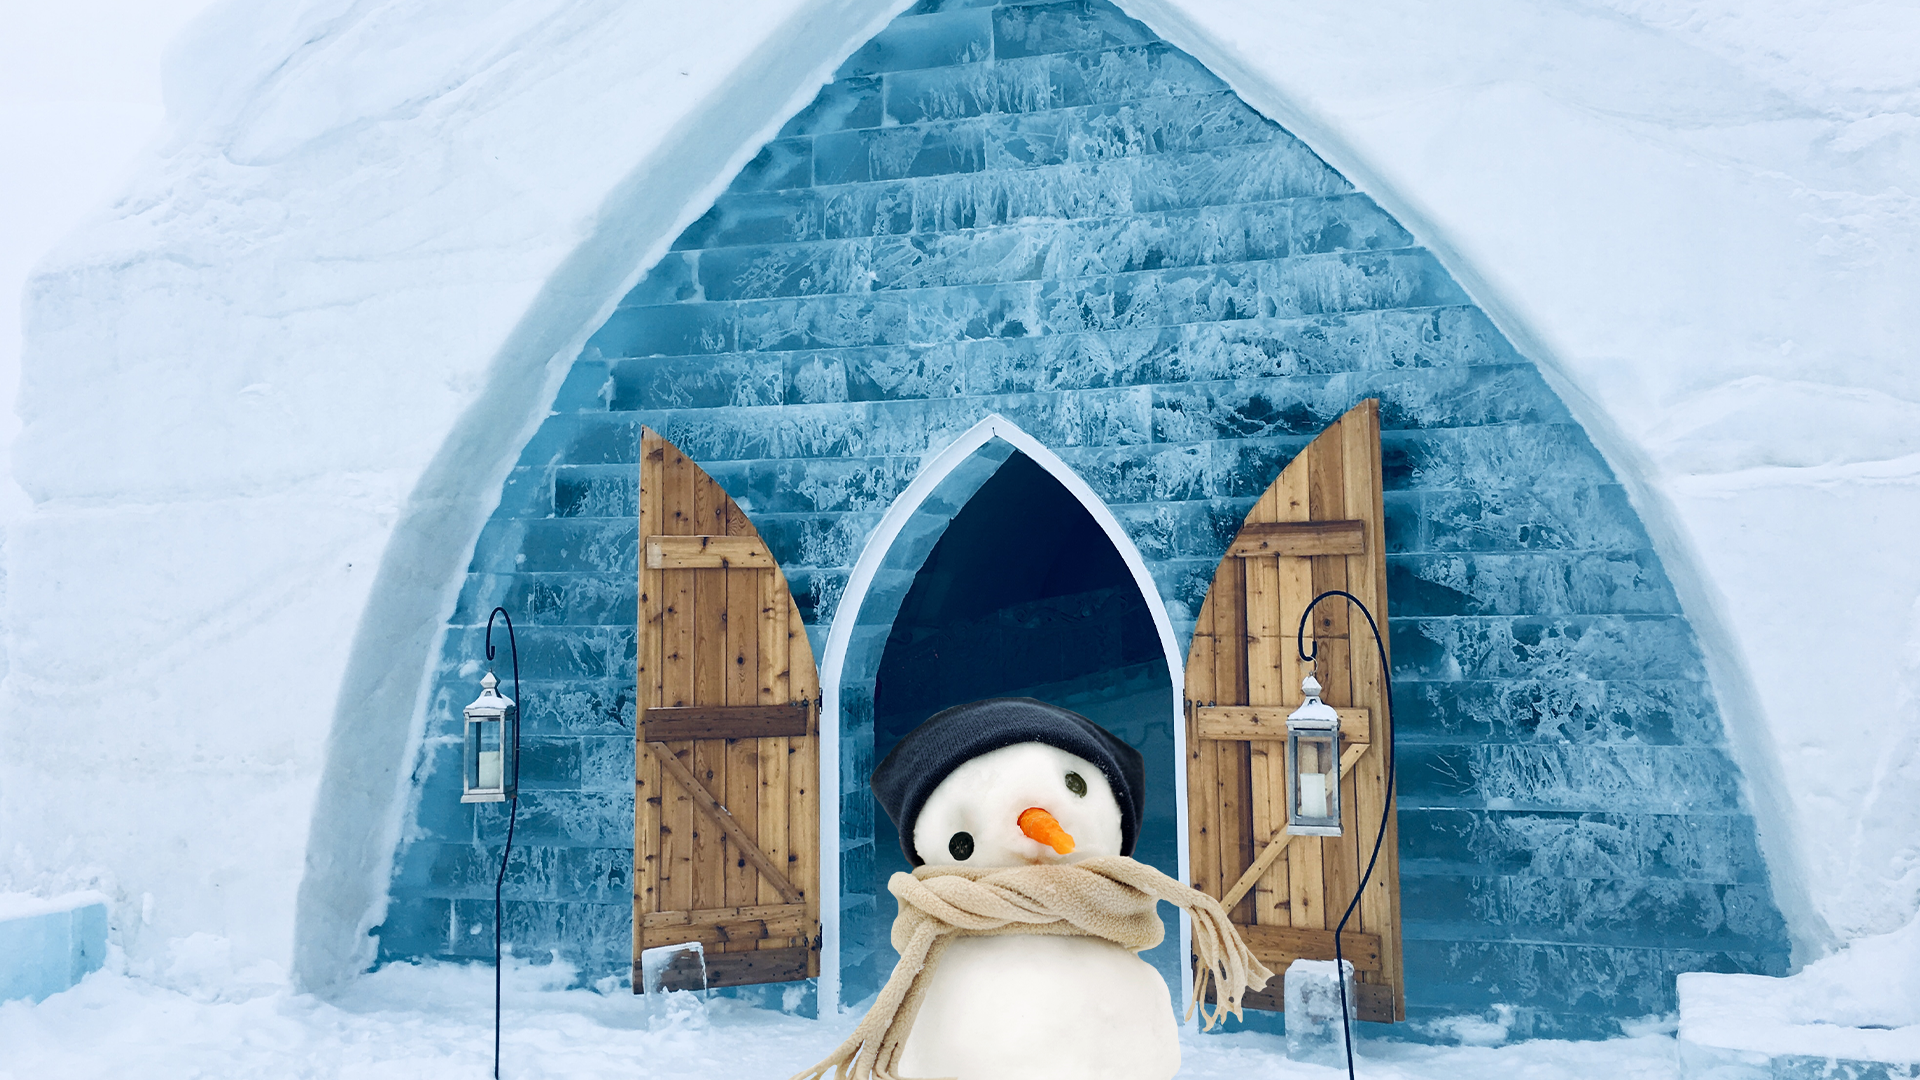 Beano snowman outside ice hotel